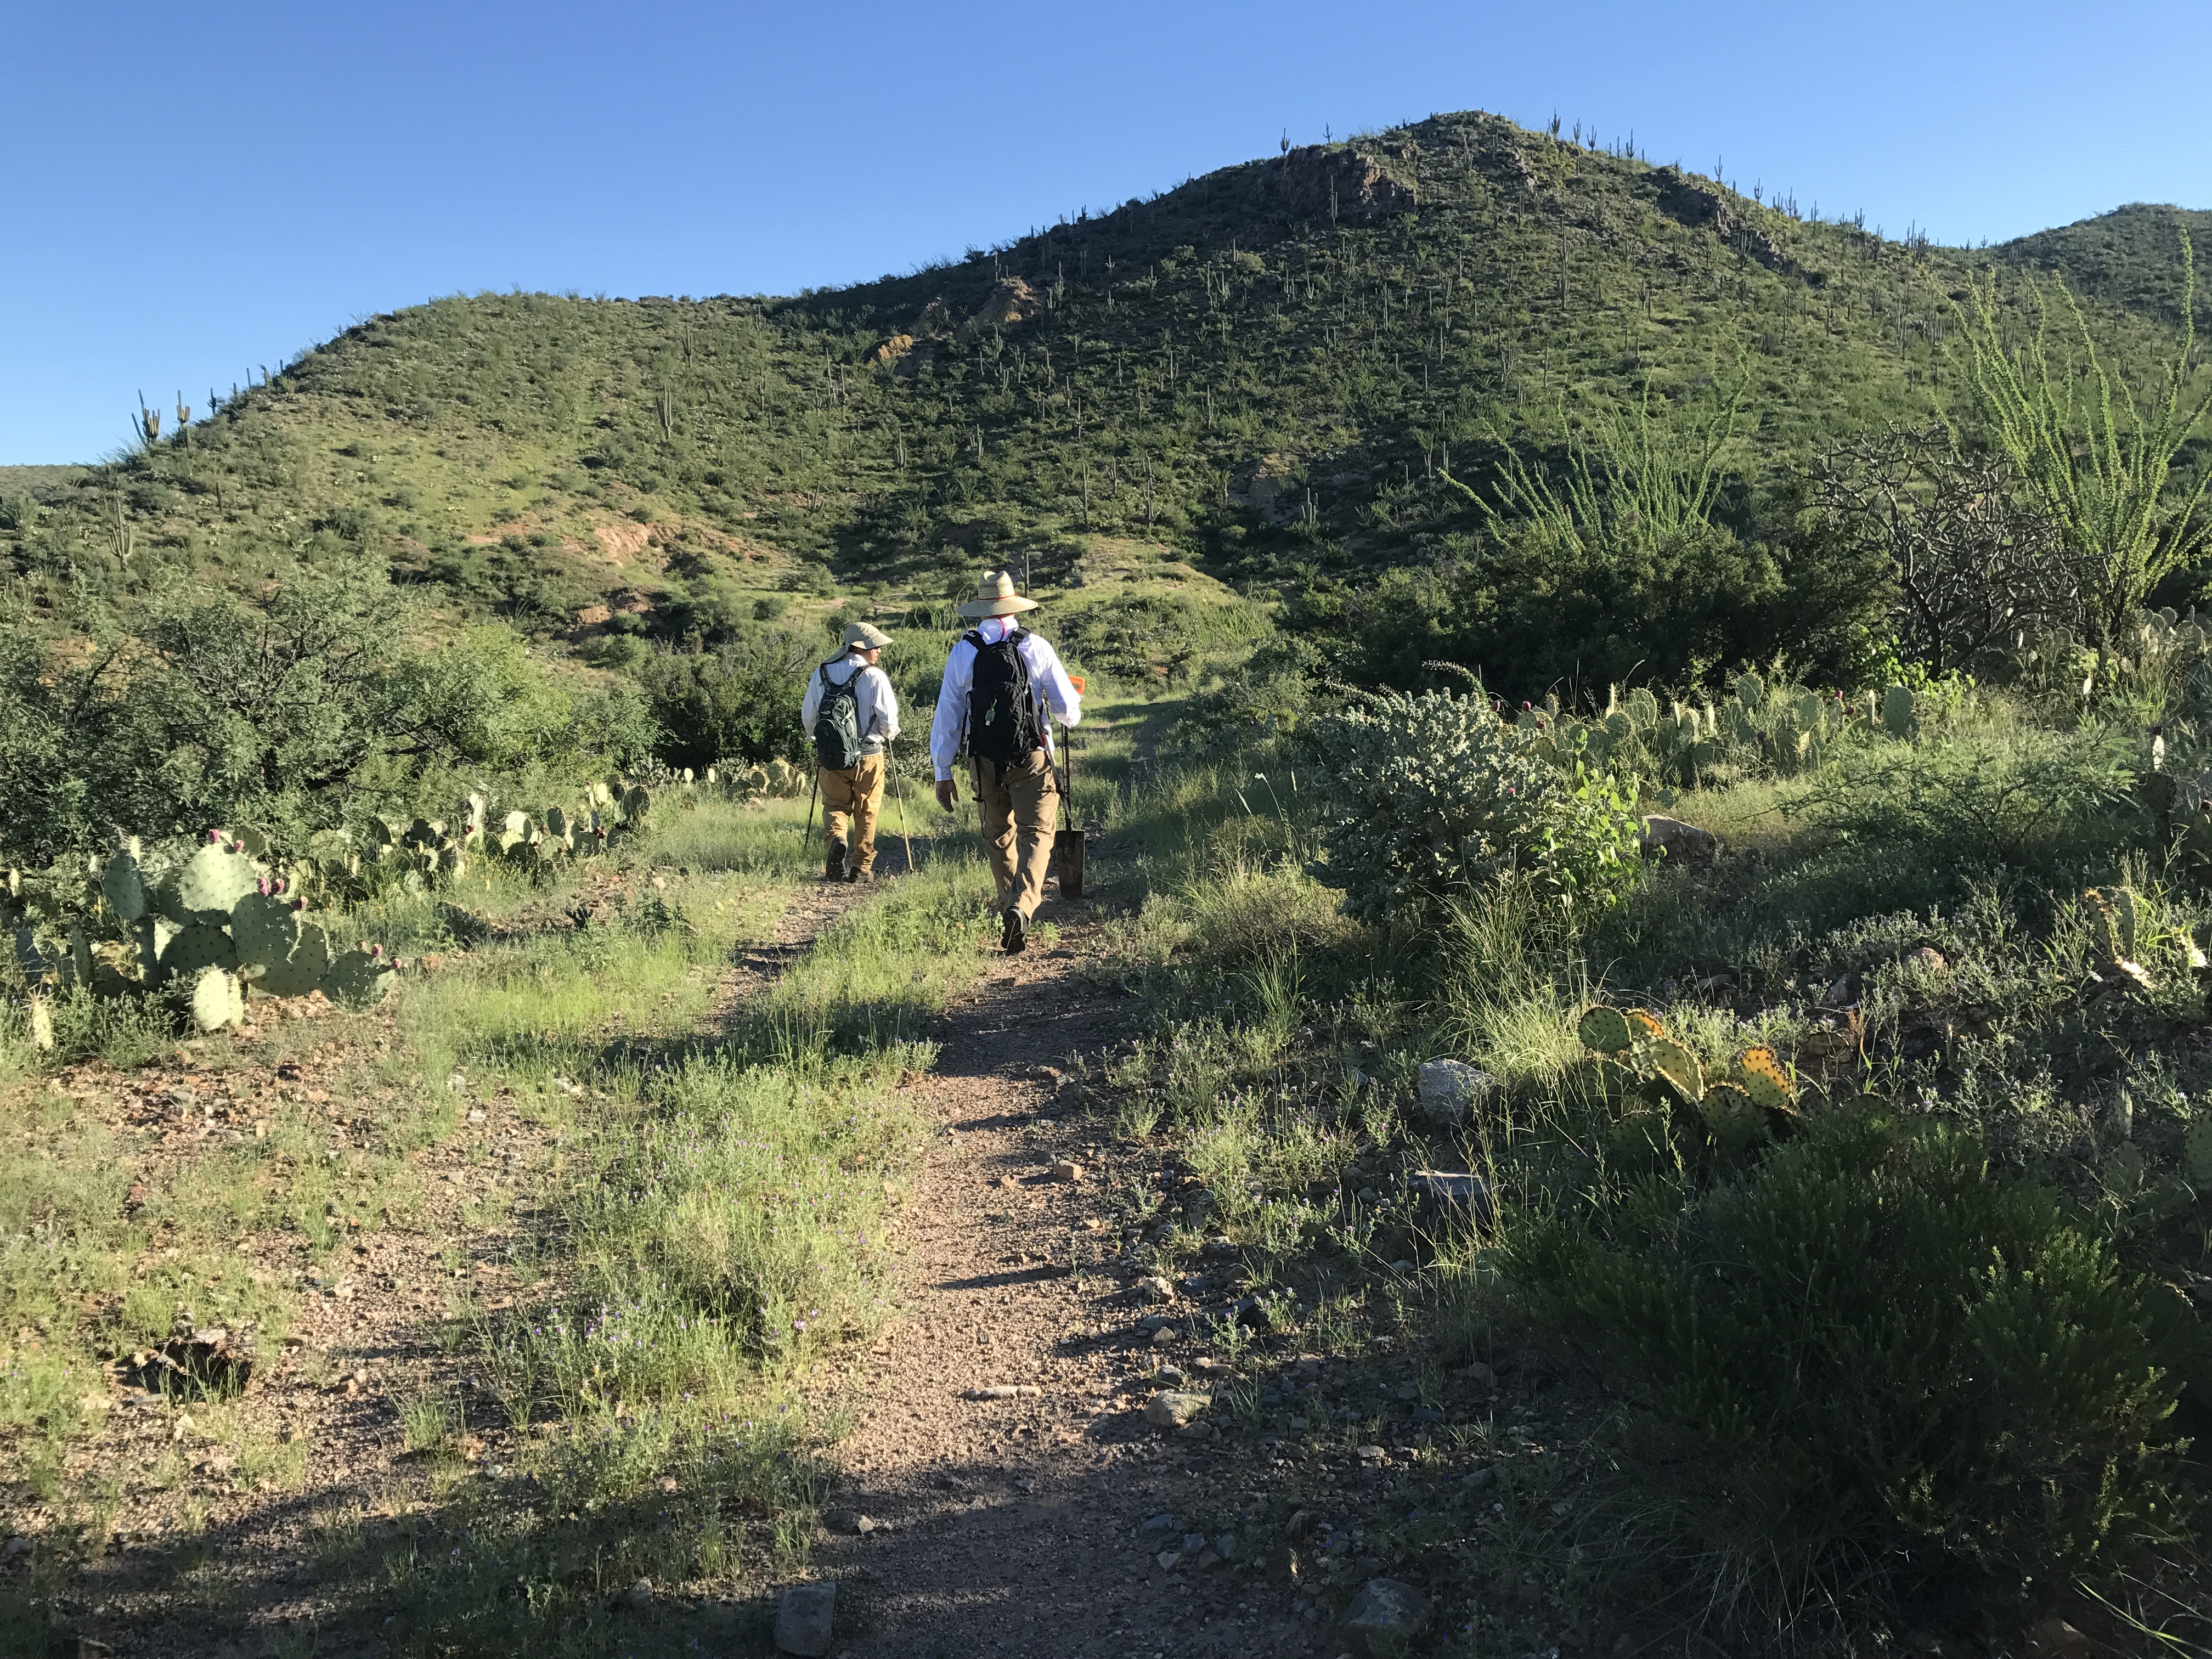 Collecting soil samples from Mt. Lemmon near Tucson, Arizona